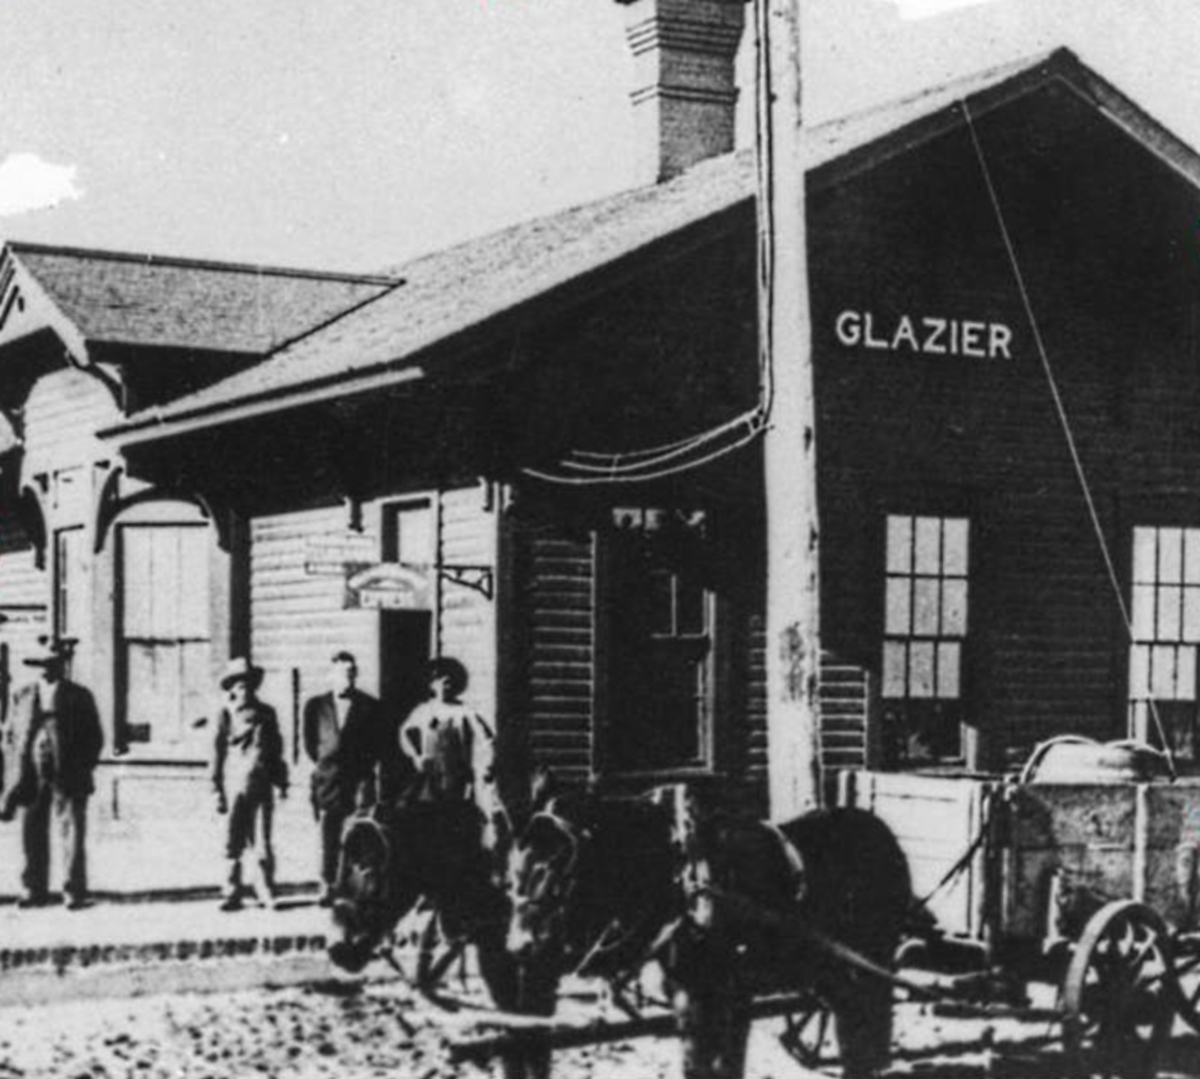 Glazier Texas Railroad Depot in 1900